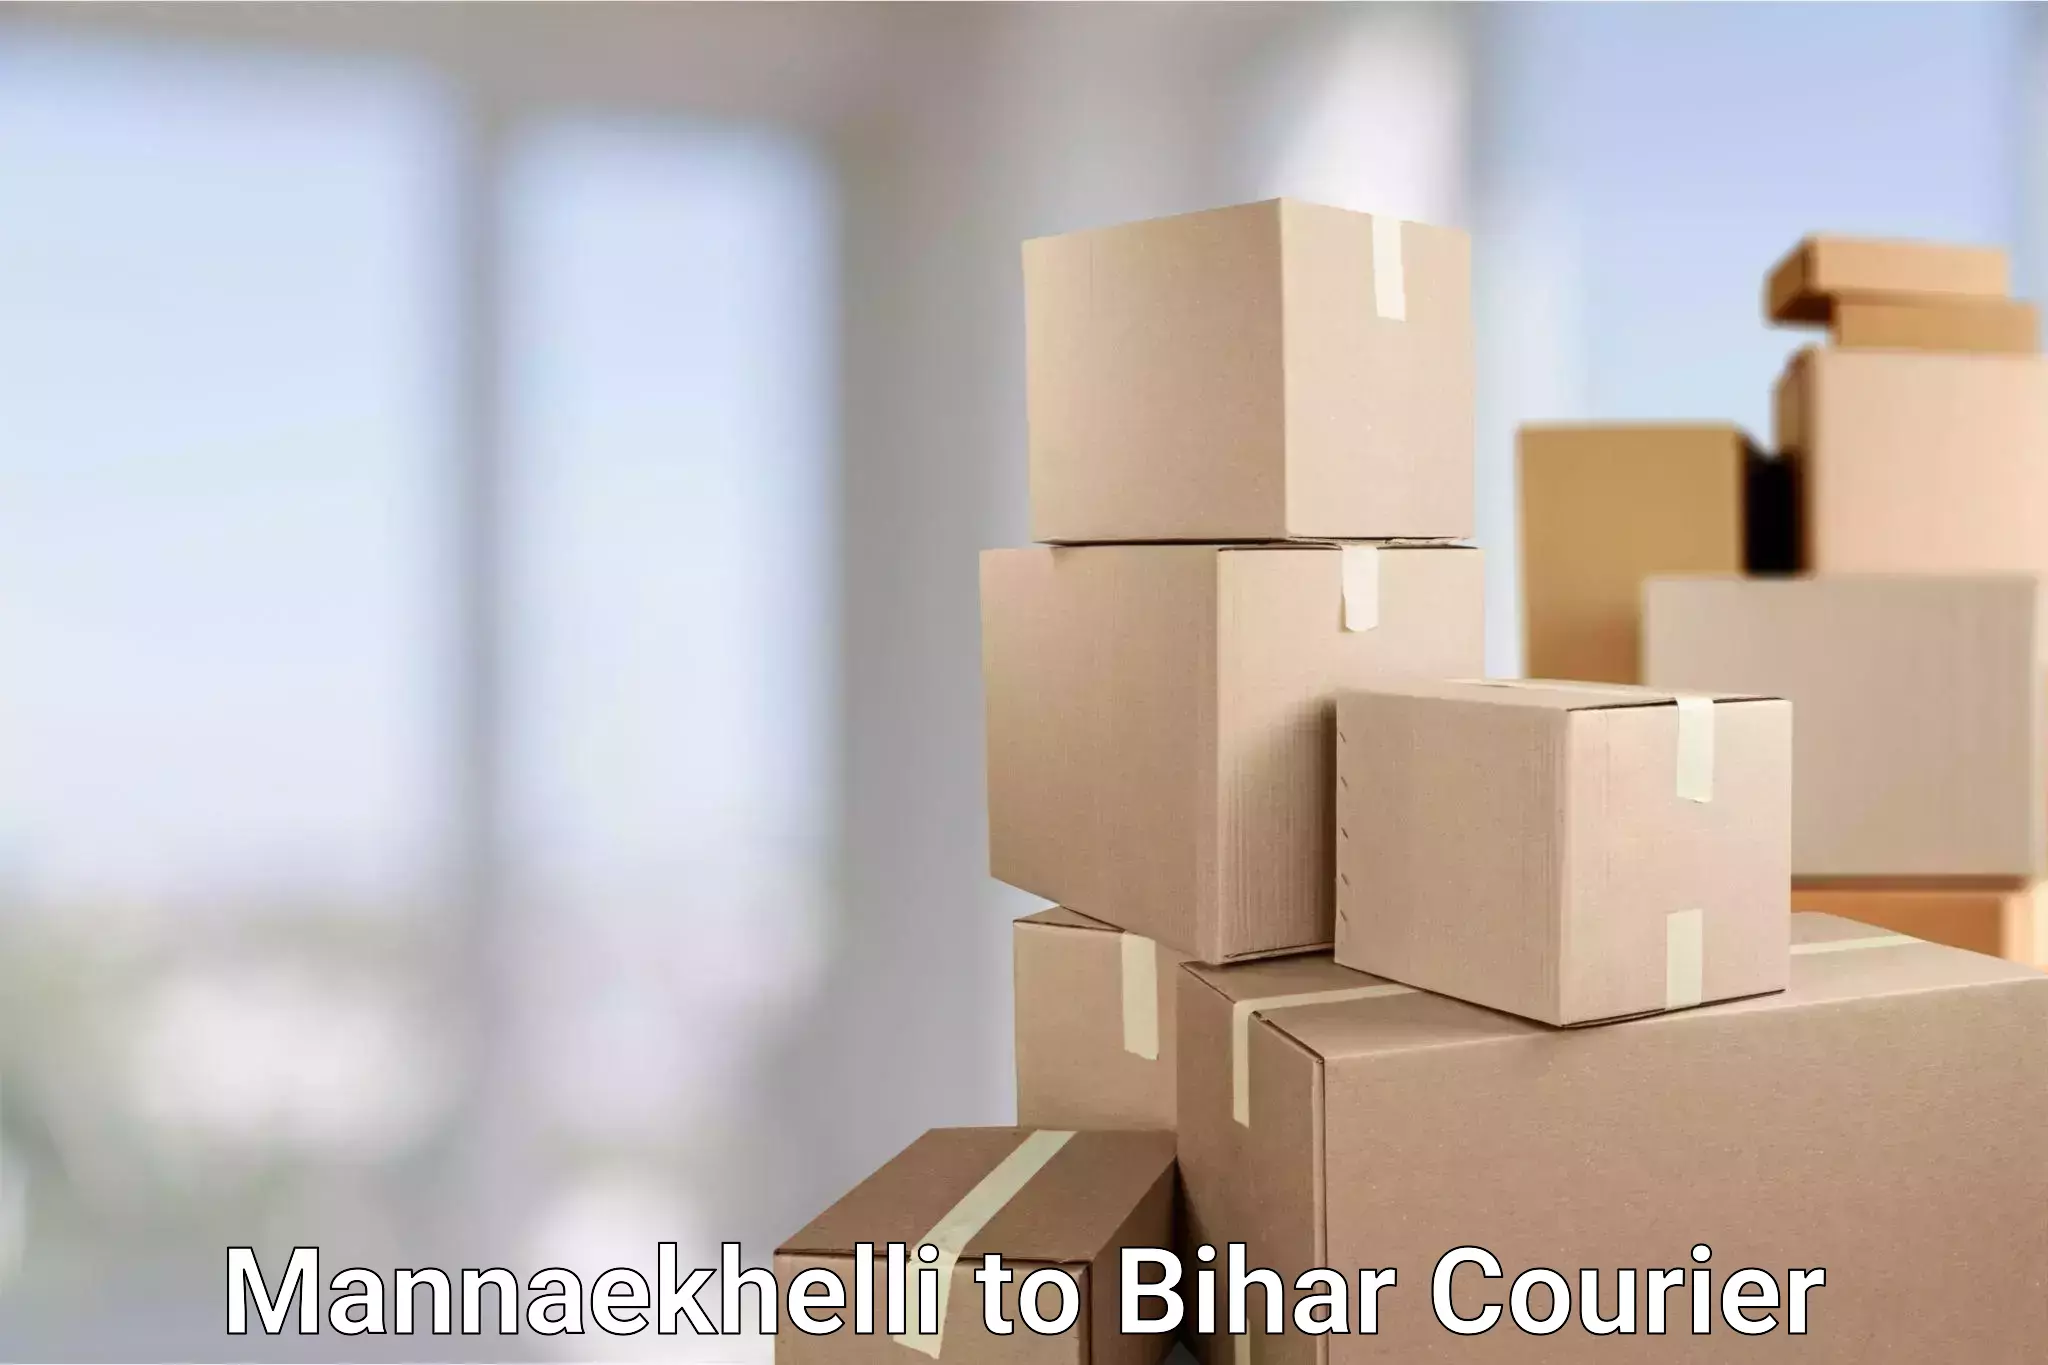 Lightweight parcel options Mannaekhelli to Bihar